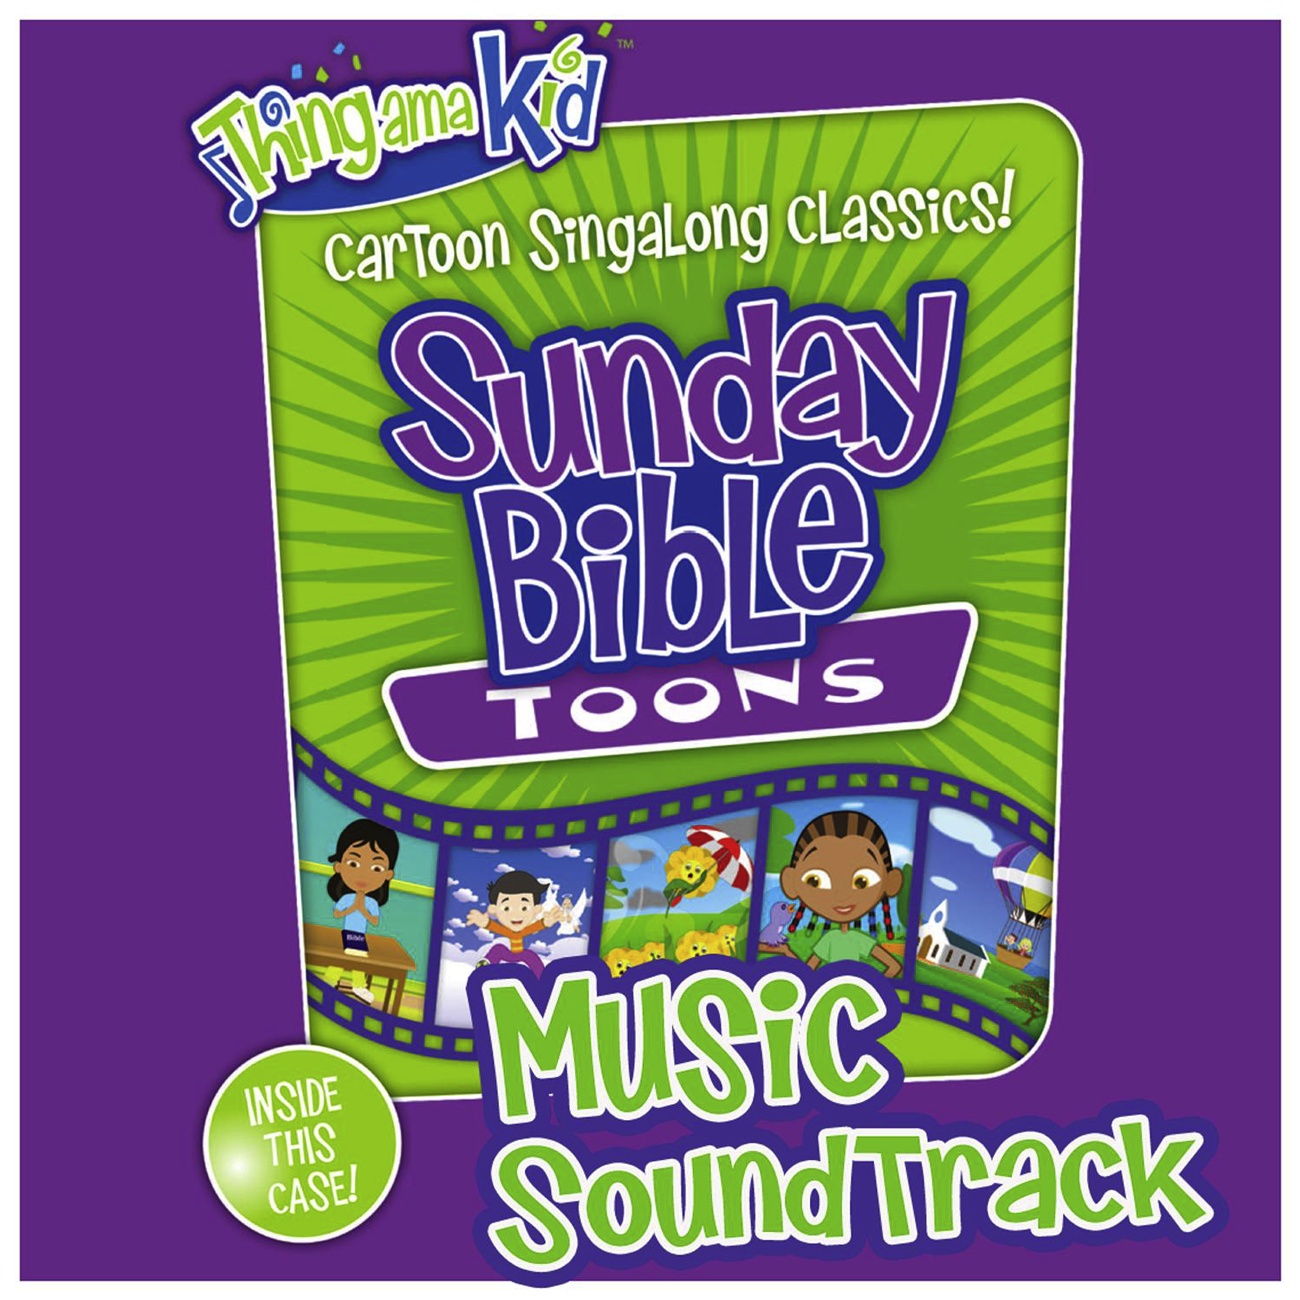 Hosanna/I've Got The Joy Medley - Split Track (Sunday Bible Toons Music Album Version)